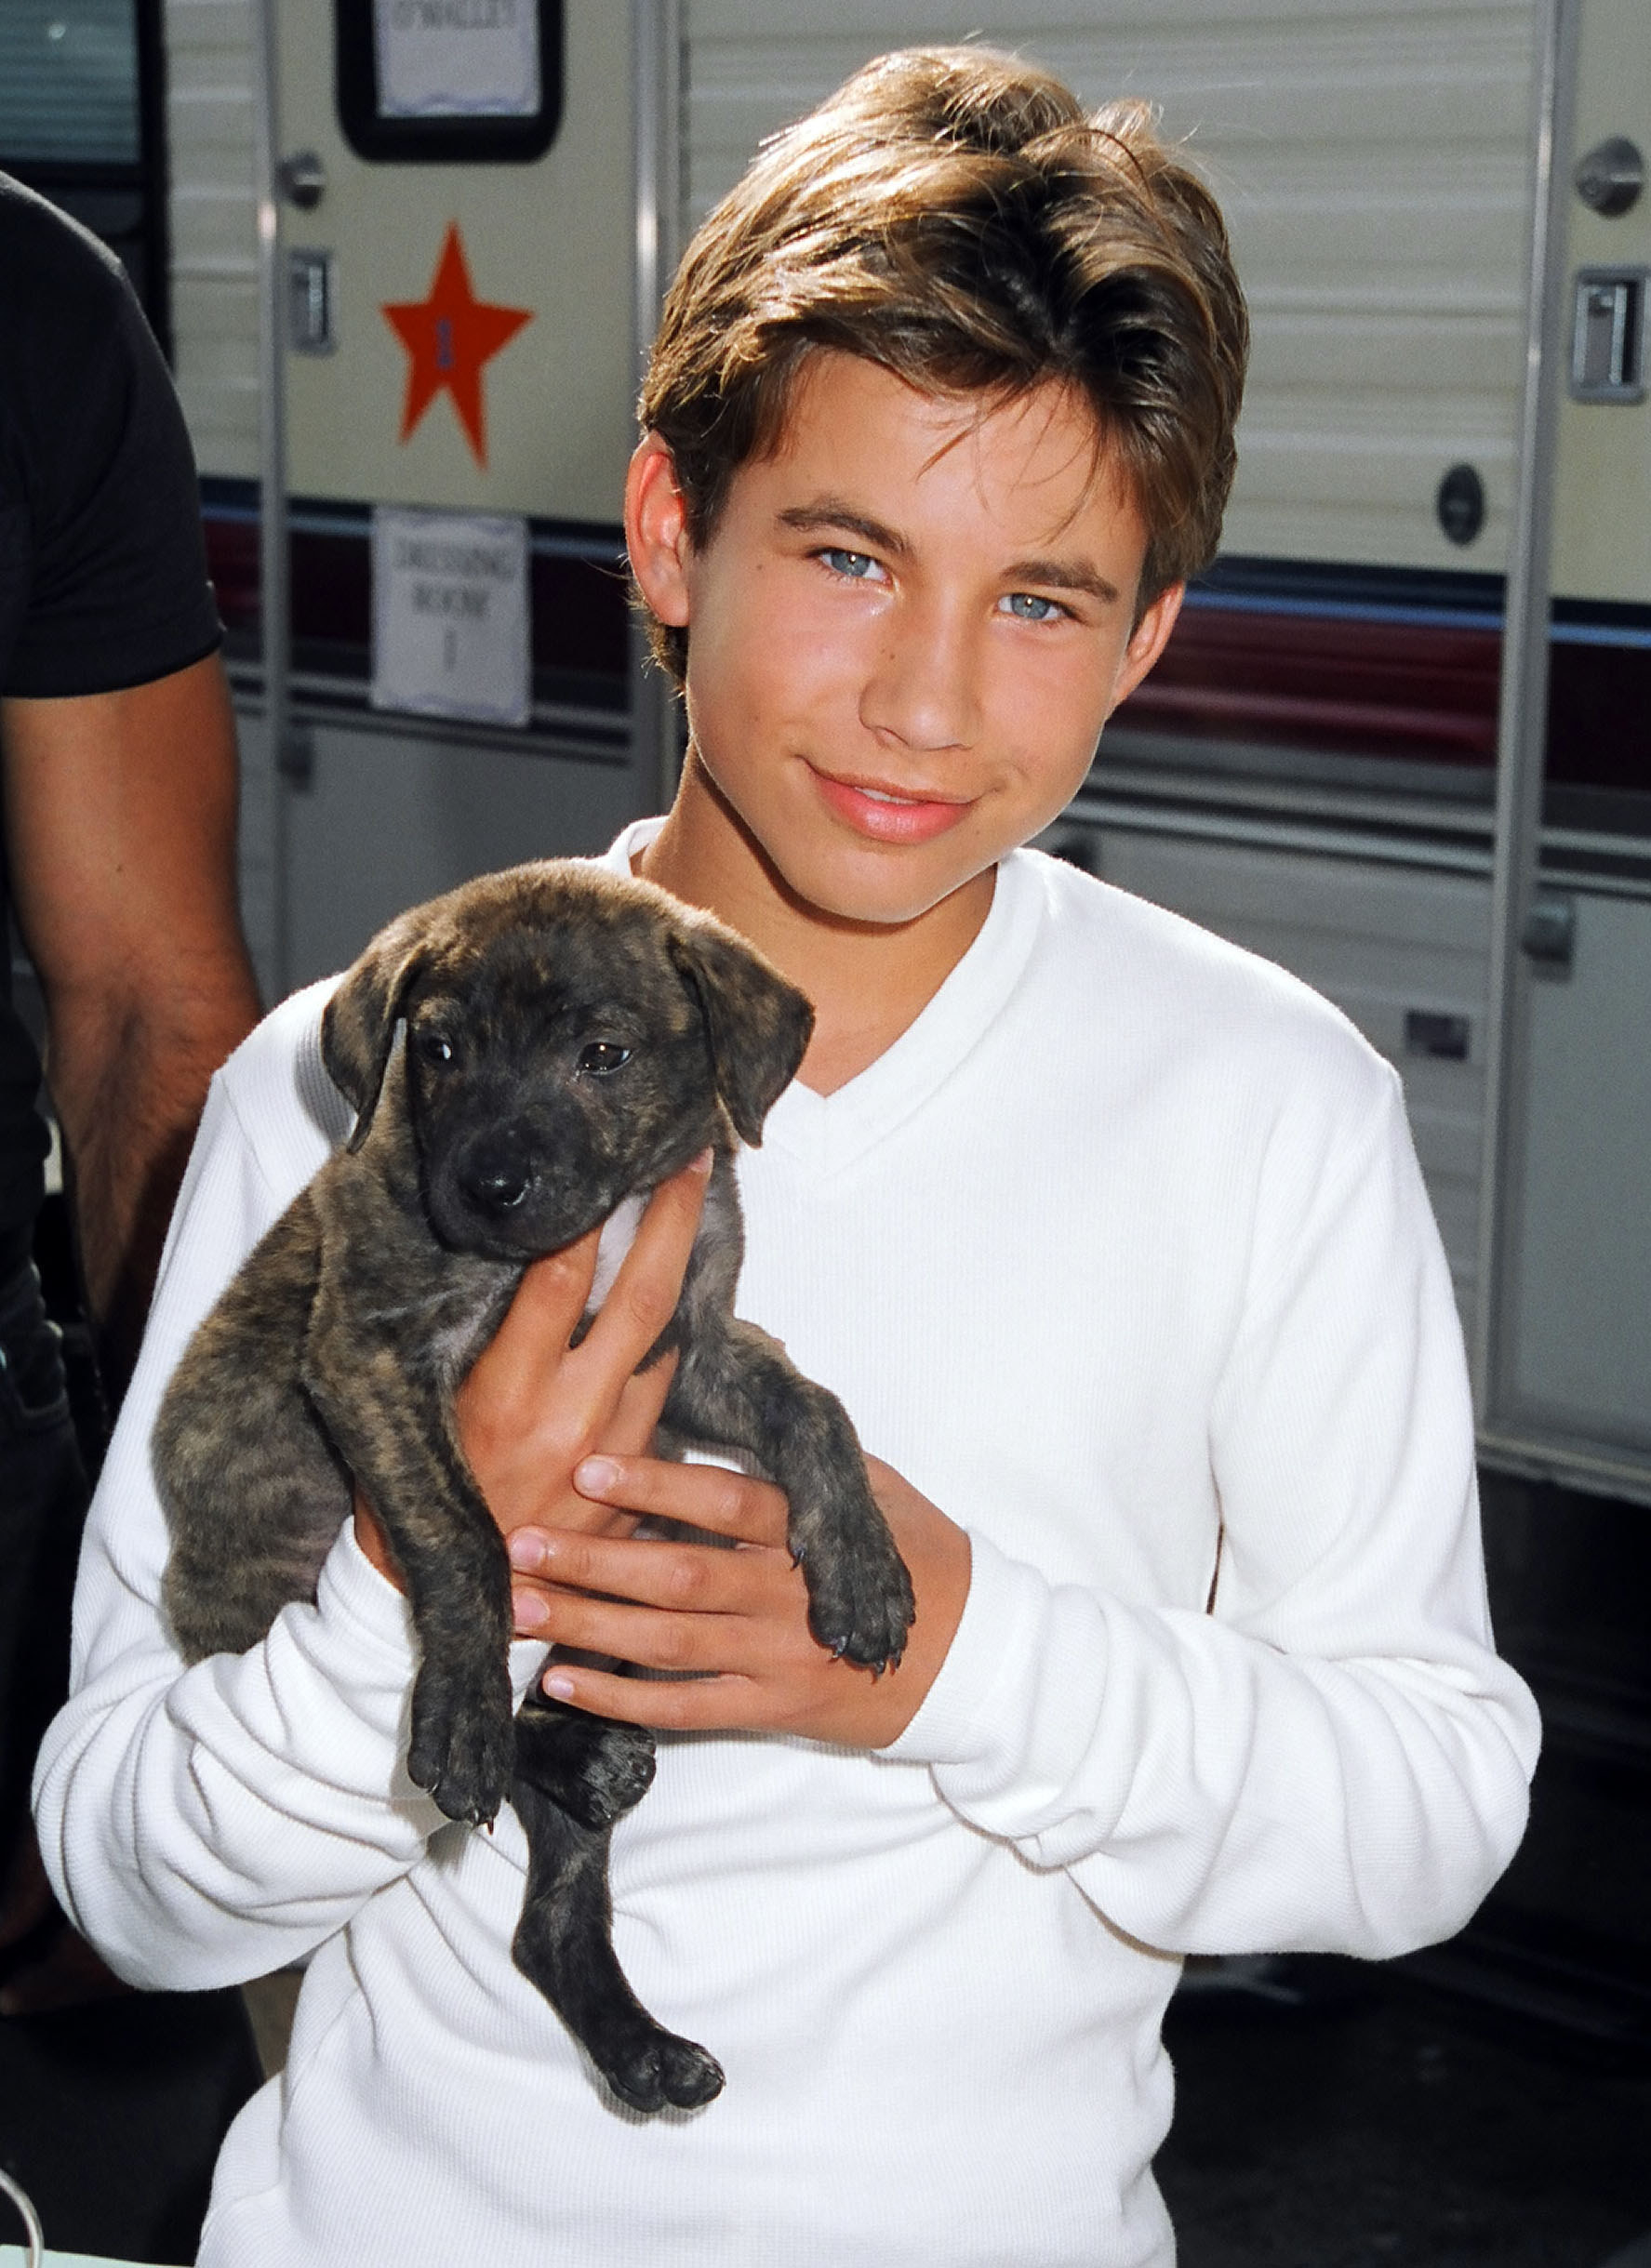 JTT holding a small dog